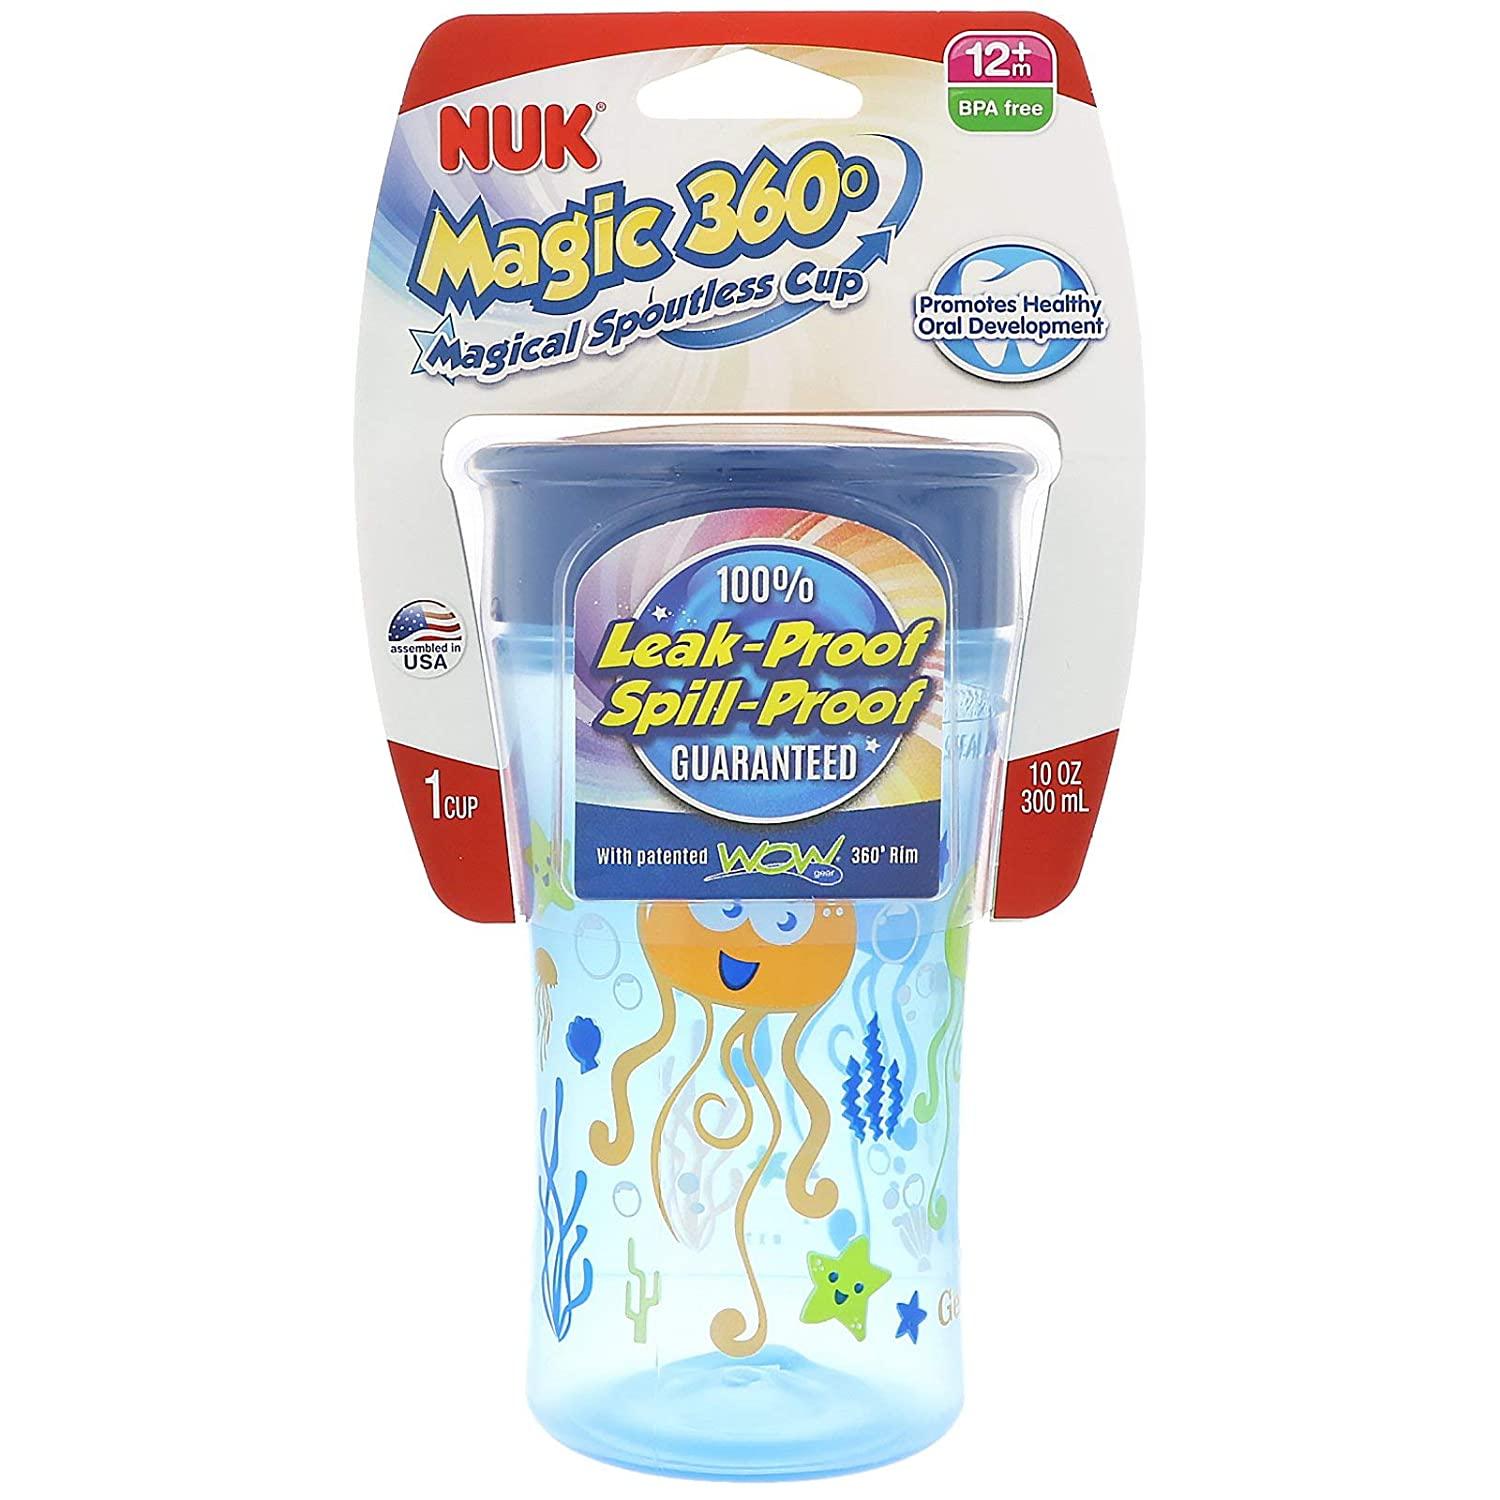 NUK Magic 360 Magical Spoutless Cup 12+ Months Boy 1 Cup 10 oz (300 ml)